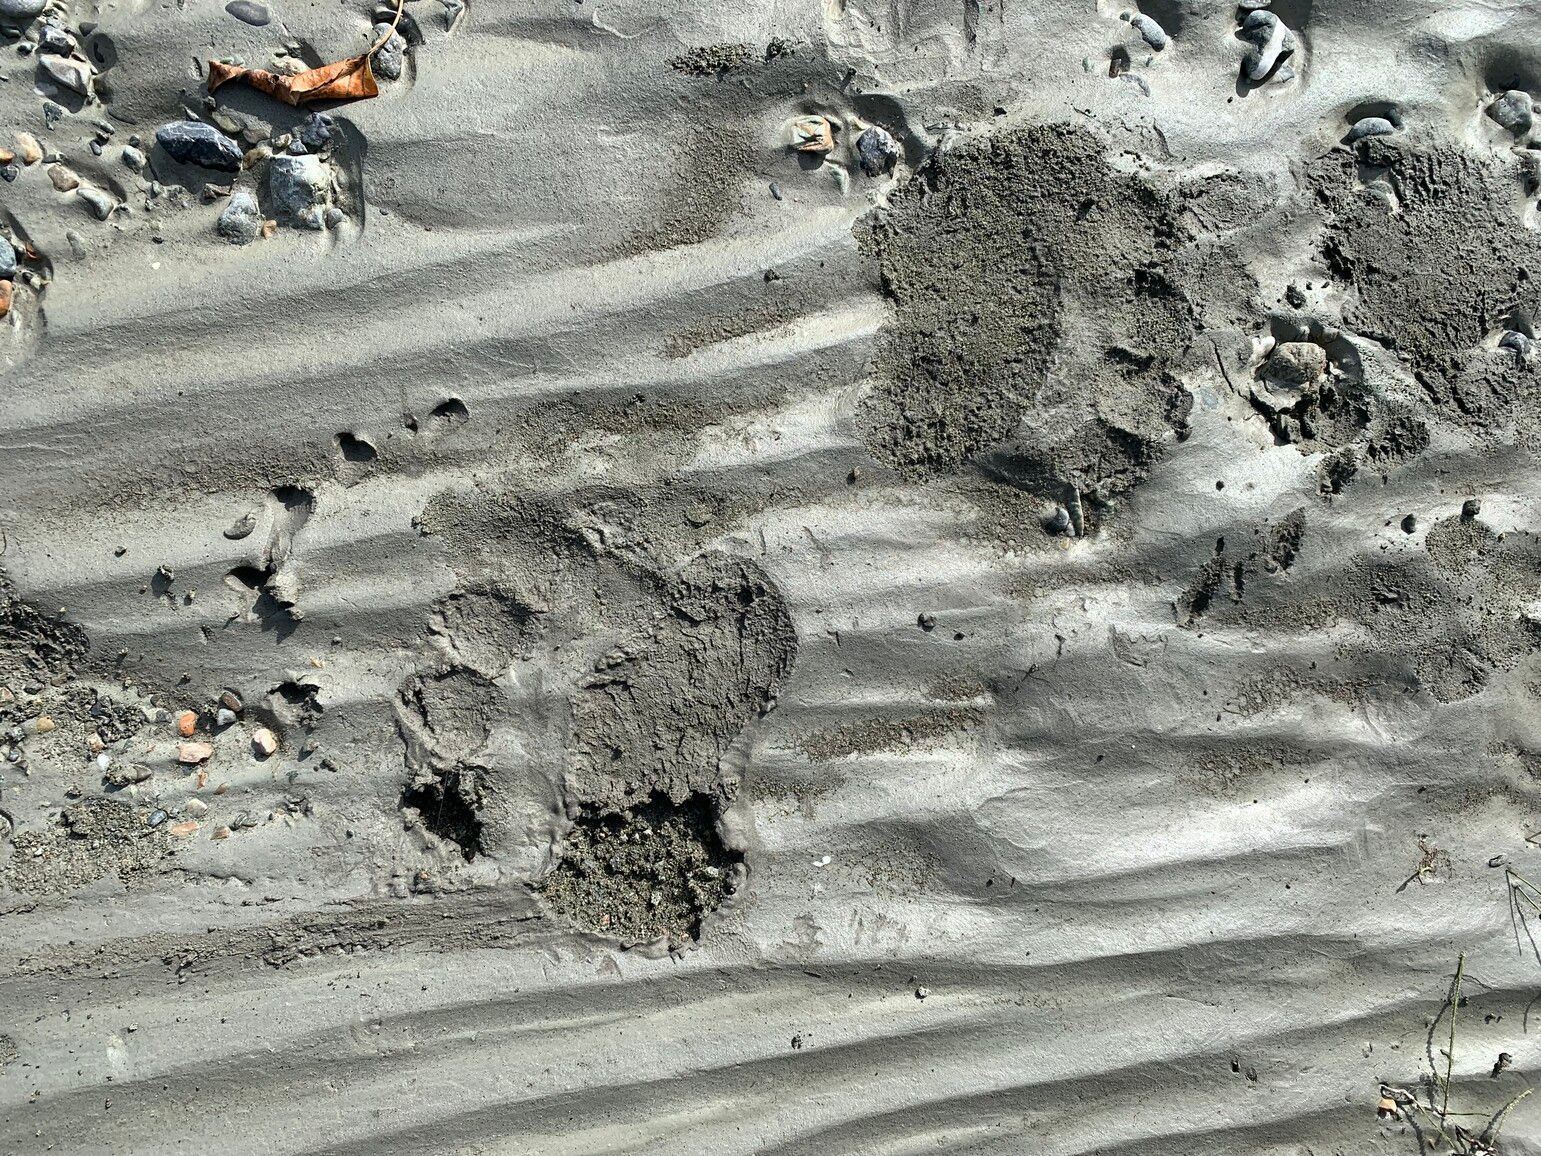 Grizzly bear prints in the silt from glaciers around the Tatshenshini River in Tatshenshini-Alsek Park.